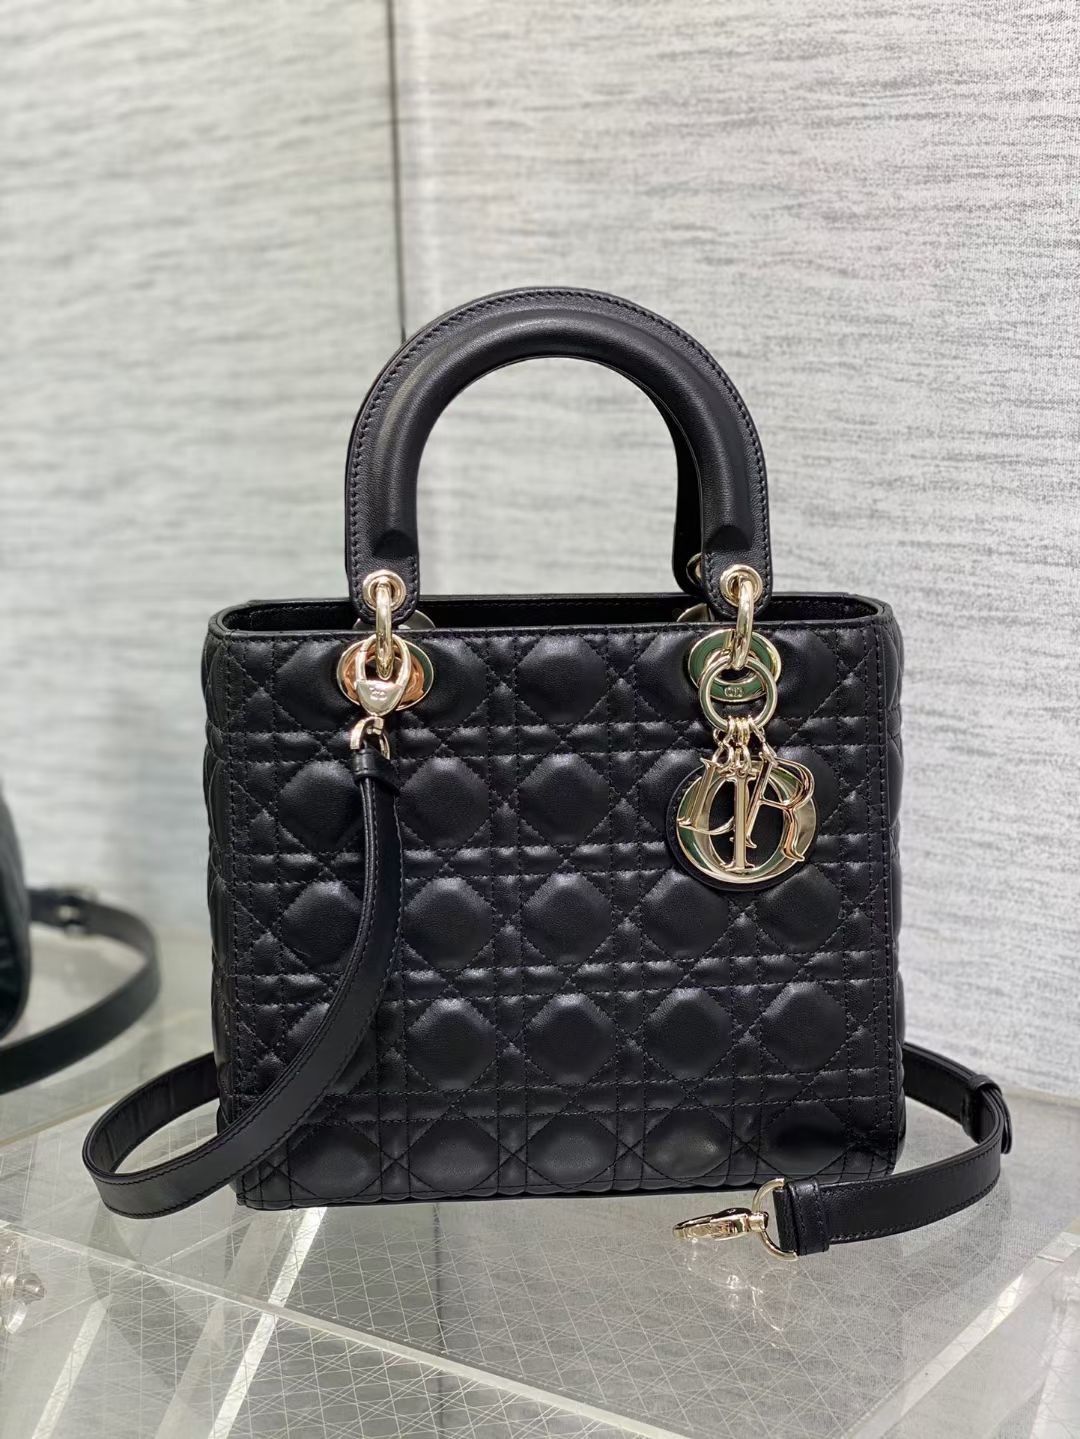 Dior Lady Handbags Crossbody & Shoulder Bags Embroidery